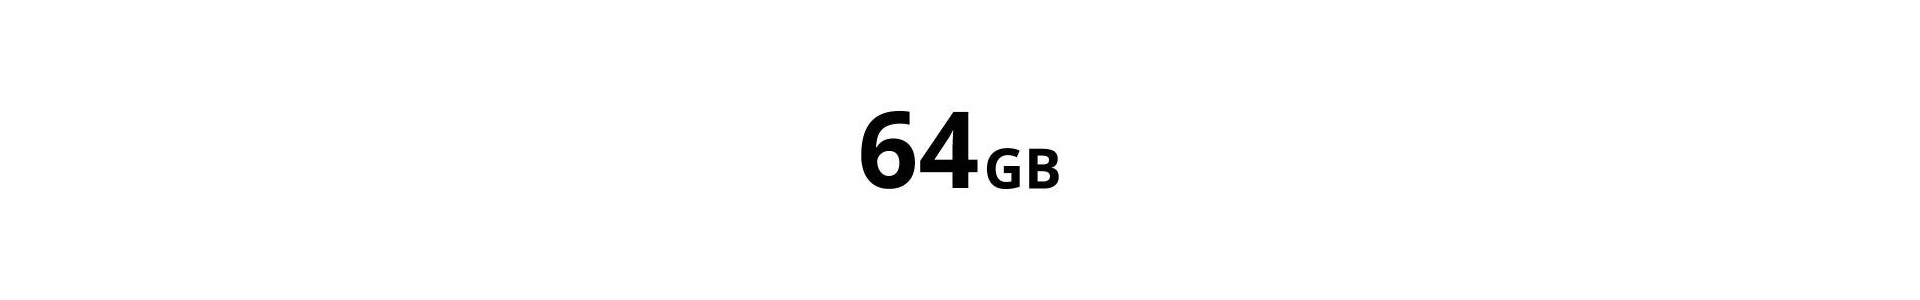 Pendrive 64GB